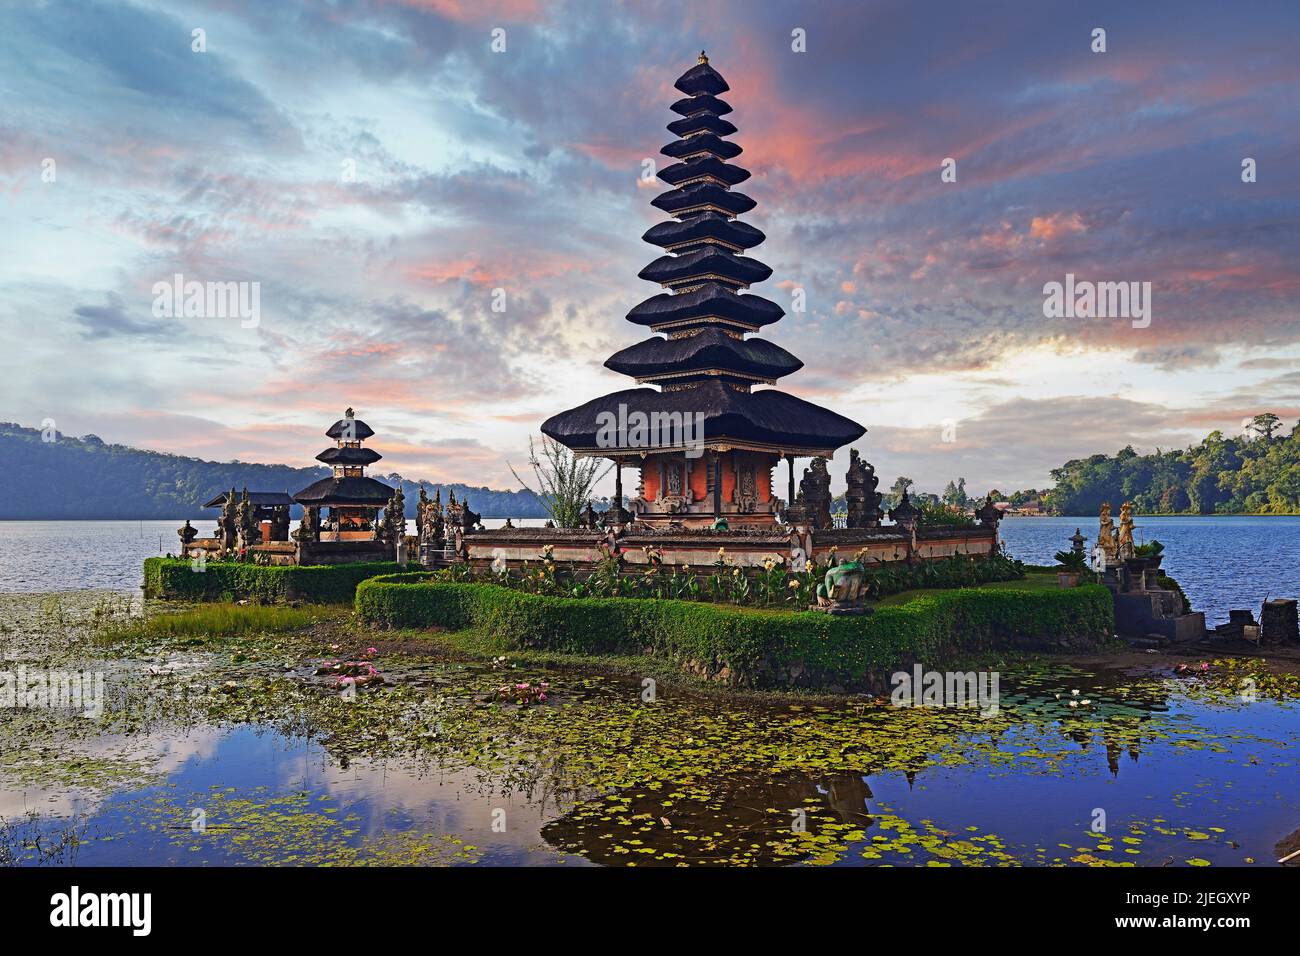 Tempel Pura Ulun Danu Bratan bei Sonnenazfgang im Bratansee , Hochland von Zentralbali, Bedugul, Bali, Indonesia Foto de stock